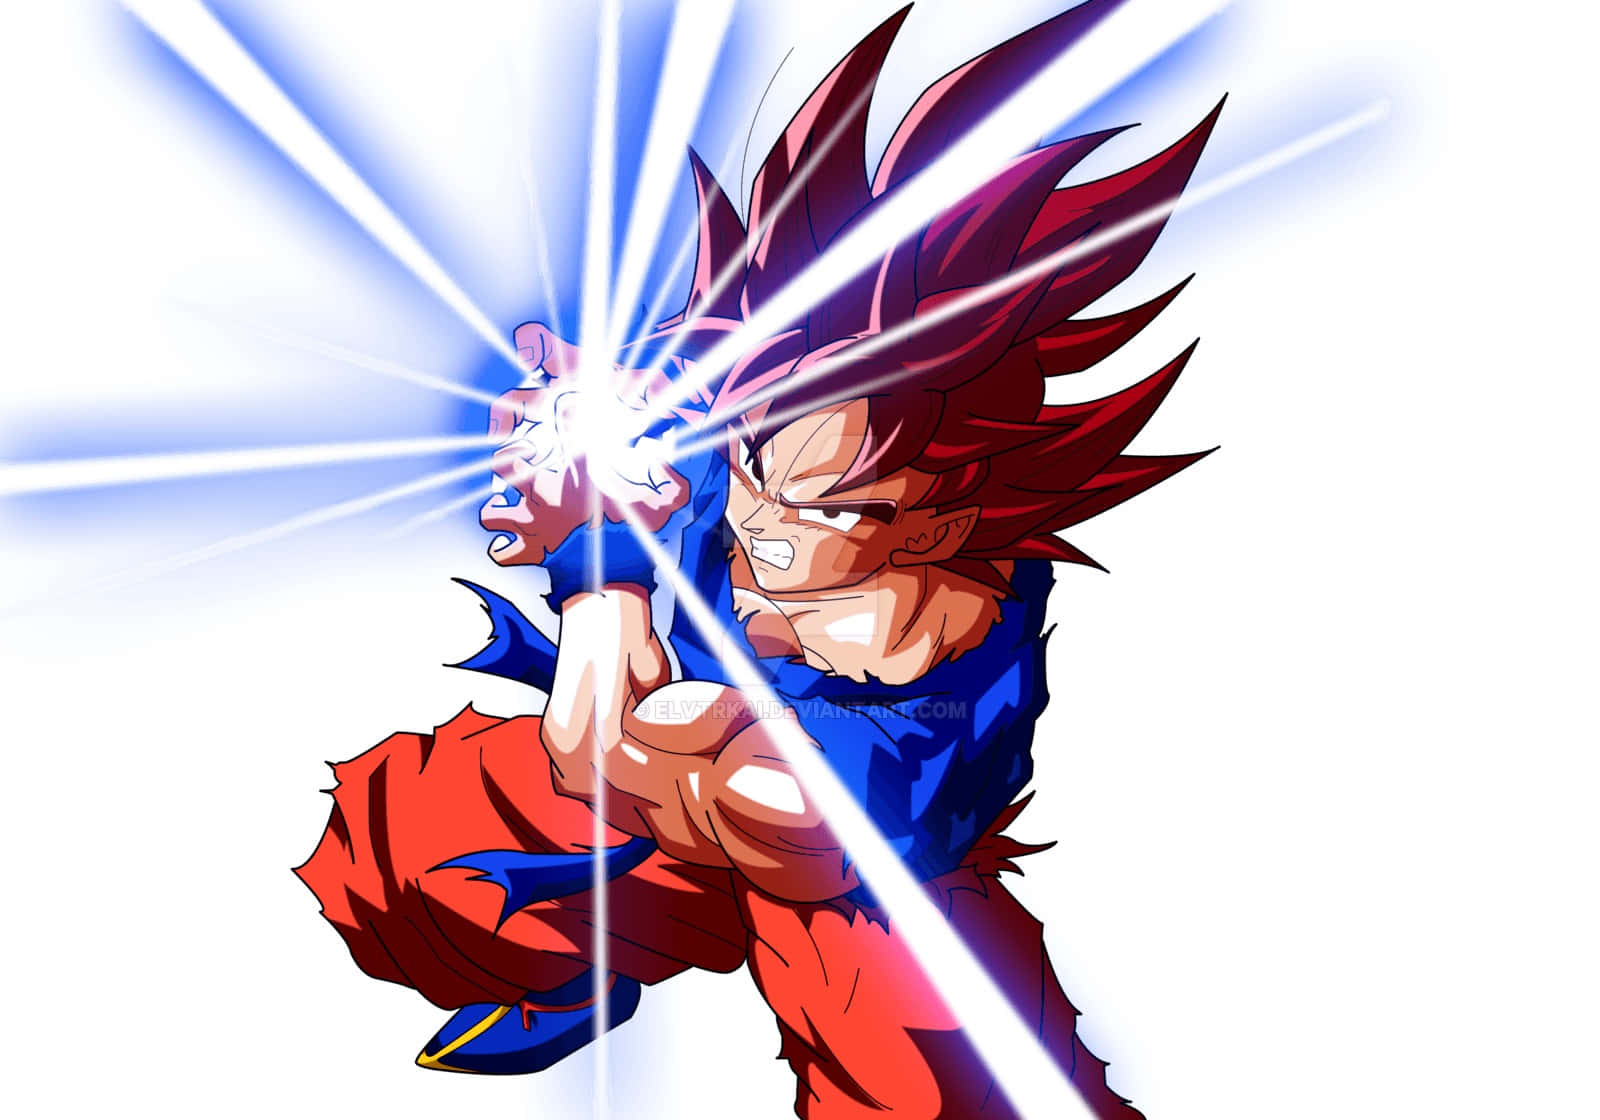 Goku SSJ Blue Kaioken, Ultra Instinct Goku transparent background